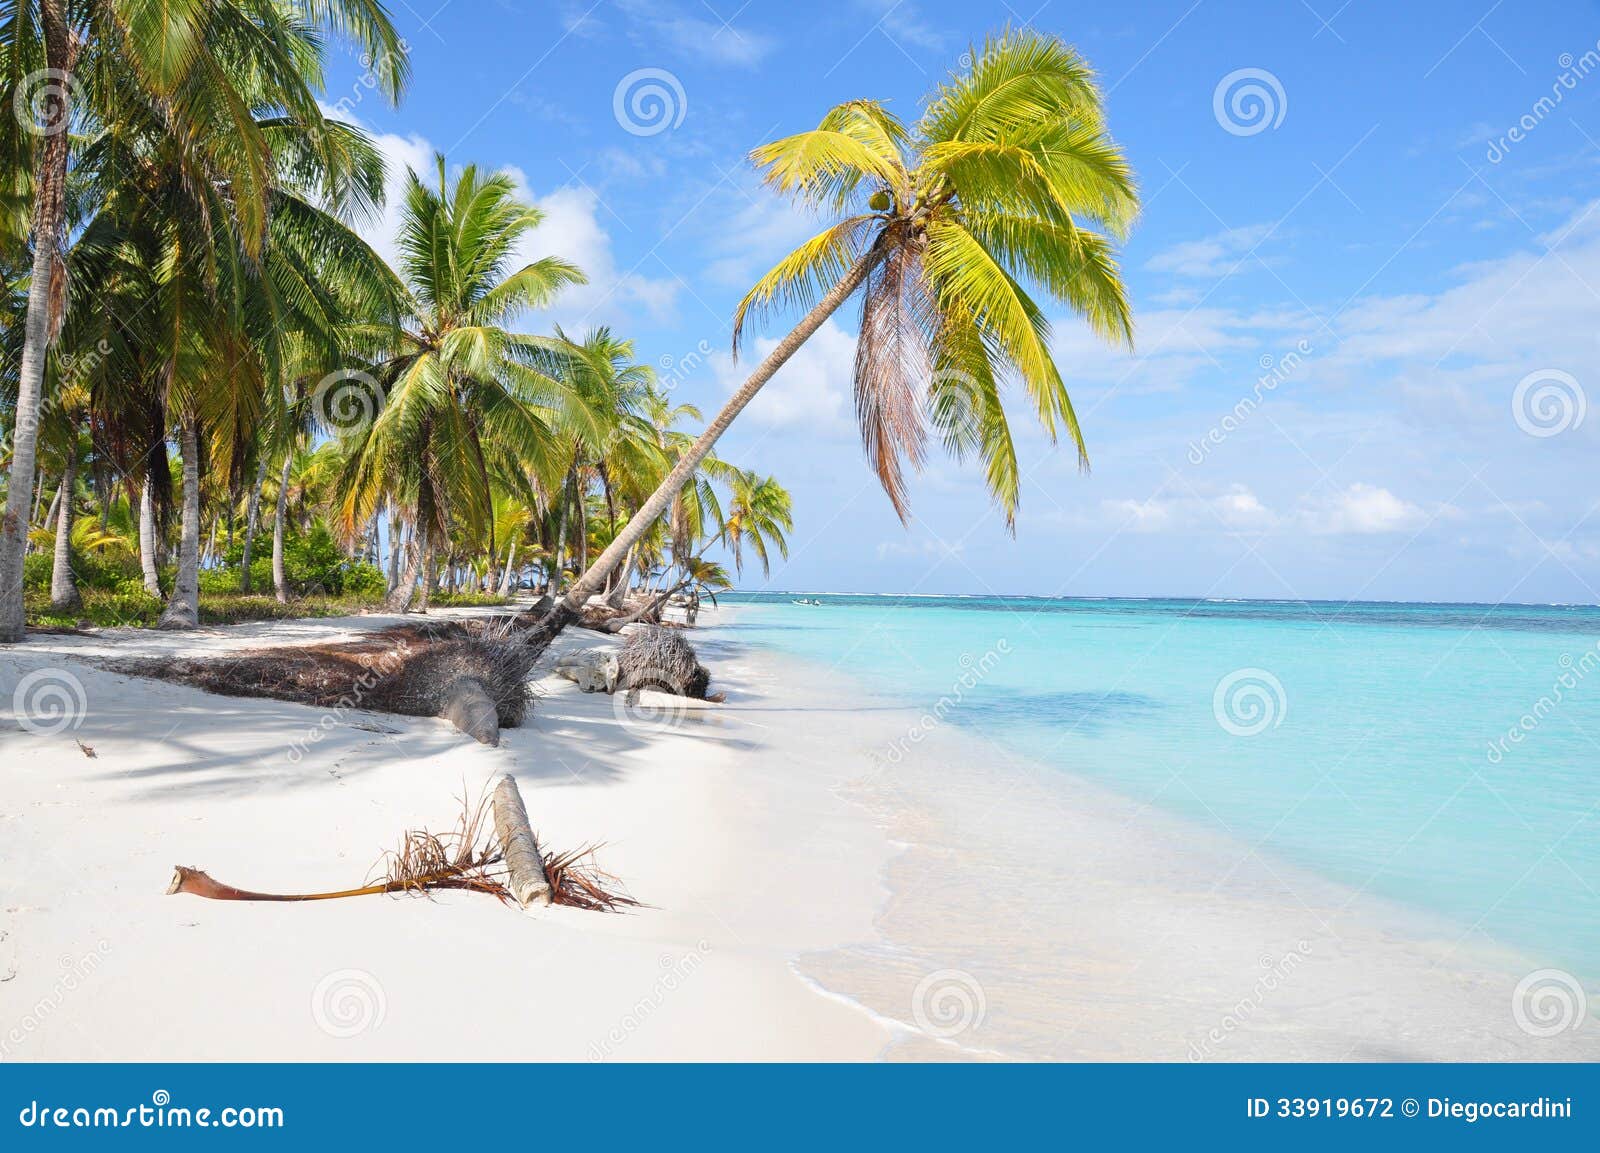 the most beautiful lonely caribbean beach at san blas island, panama. central america